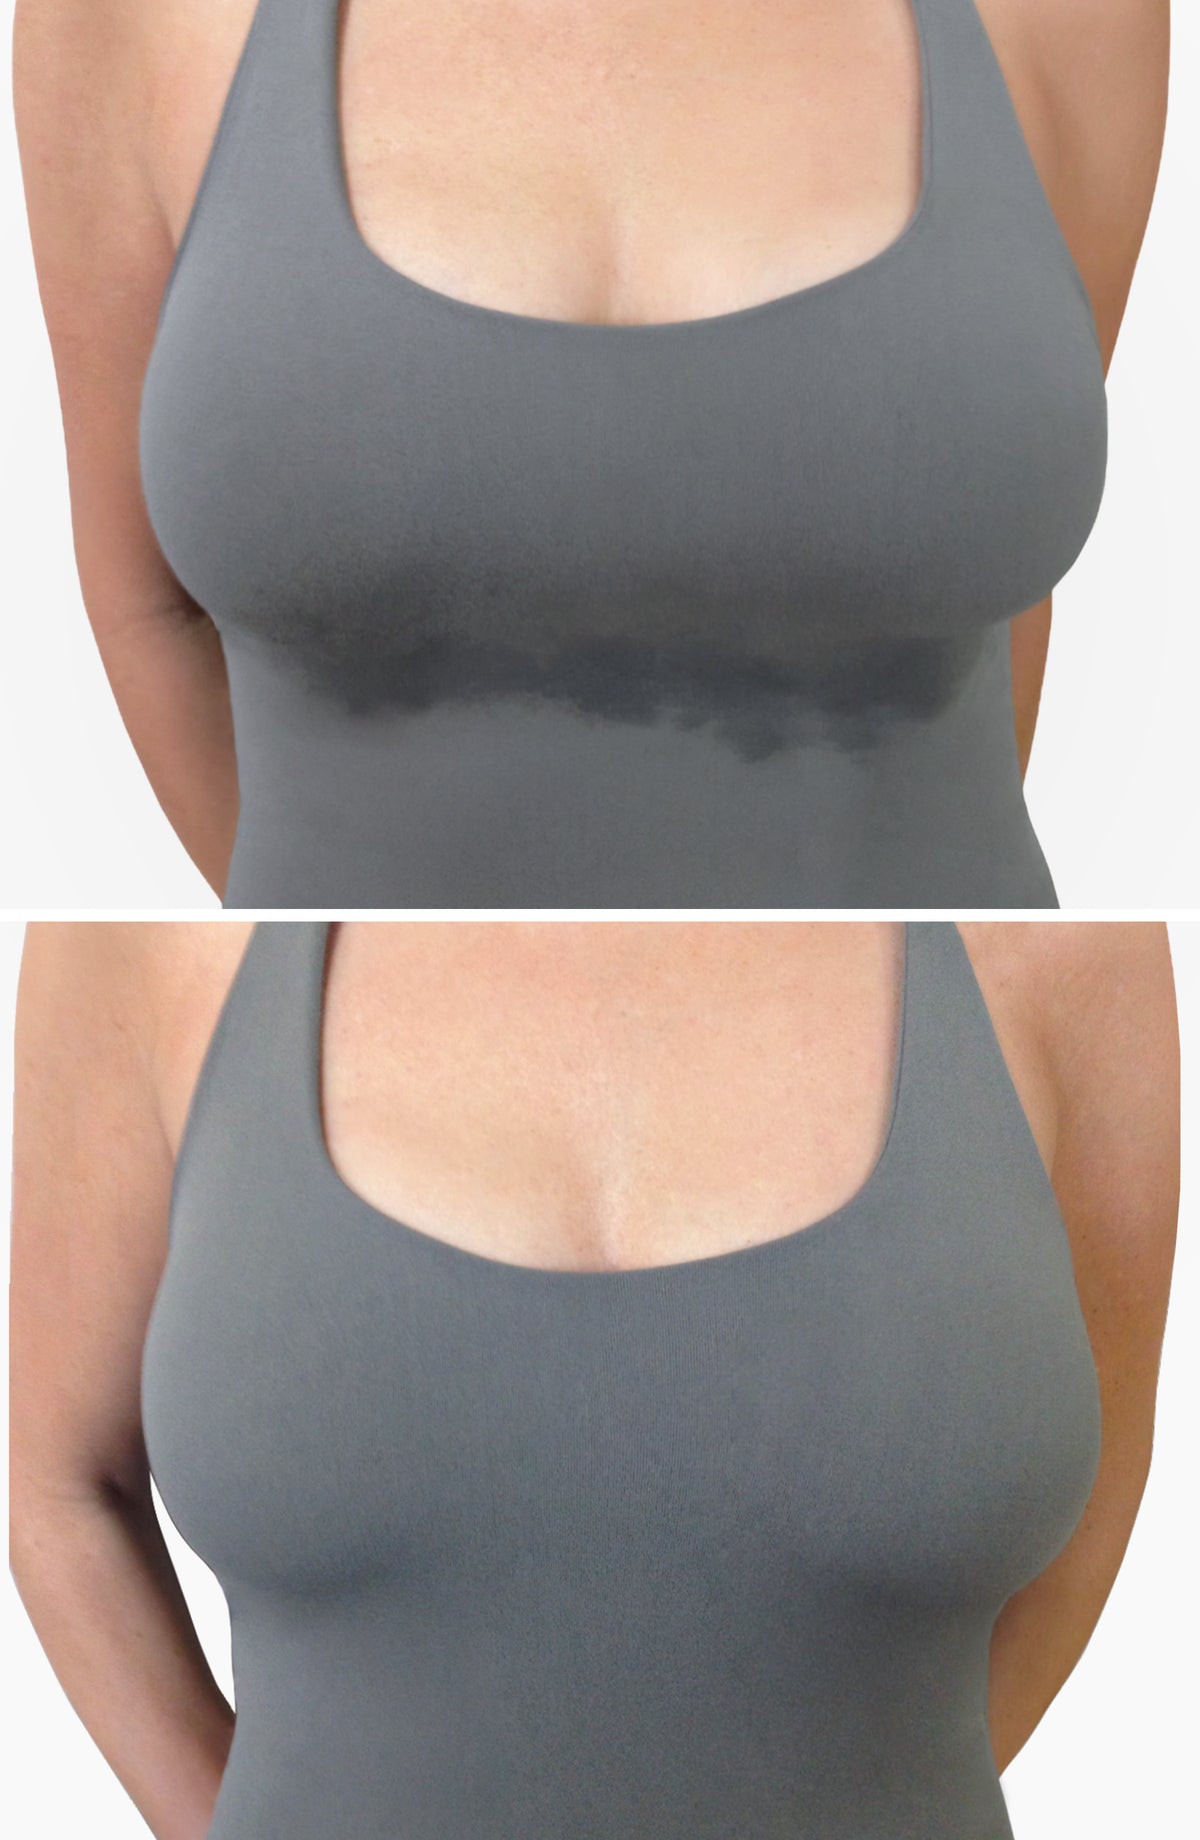 Underboob sweat bra: You can now buy a bra which stops underboob sweat!!